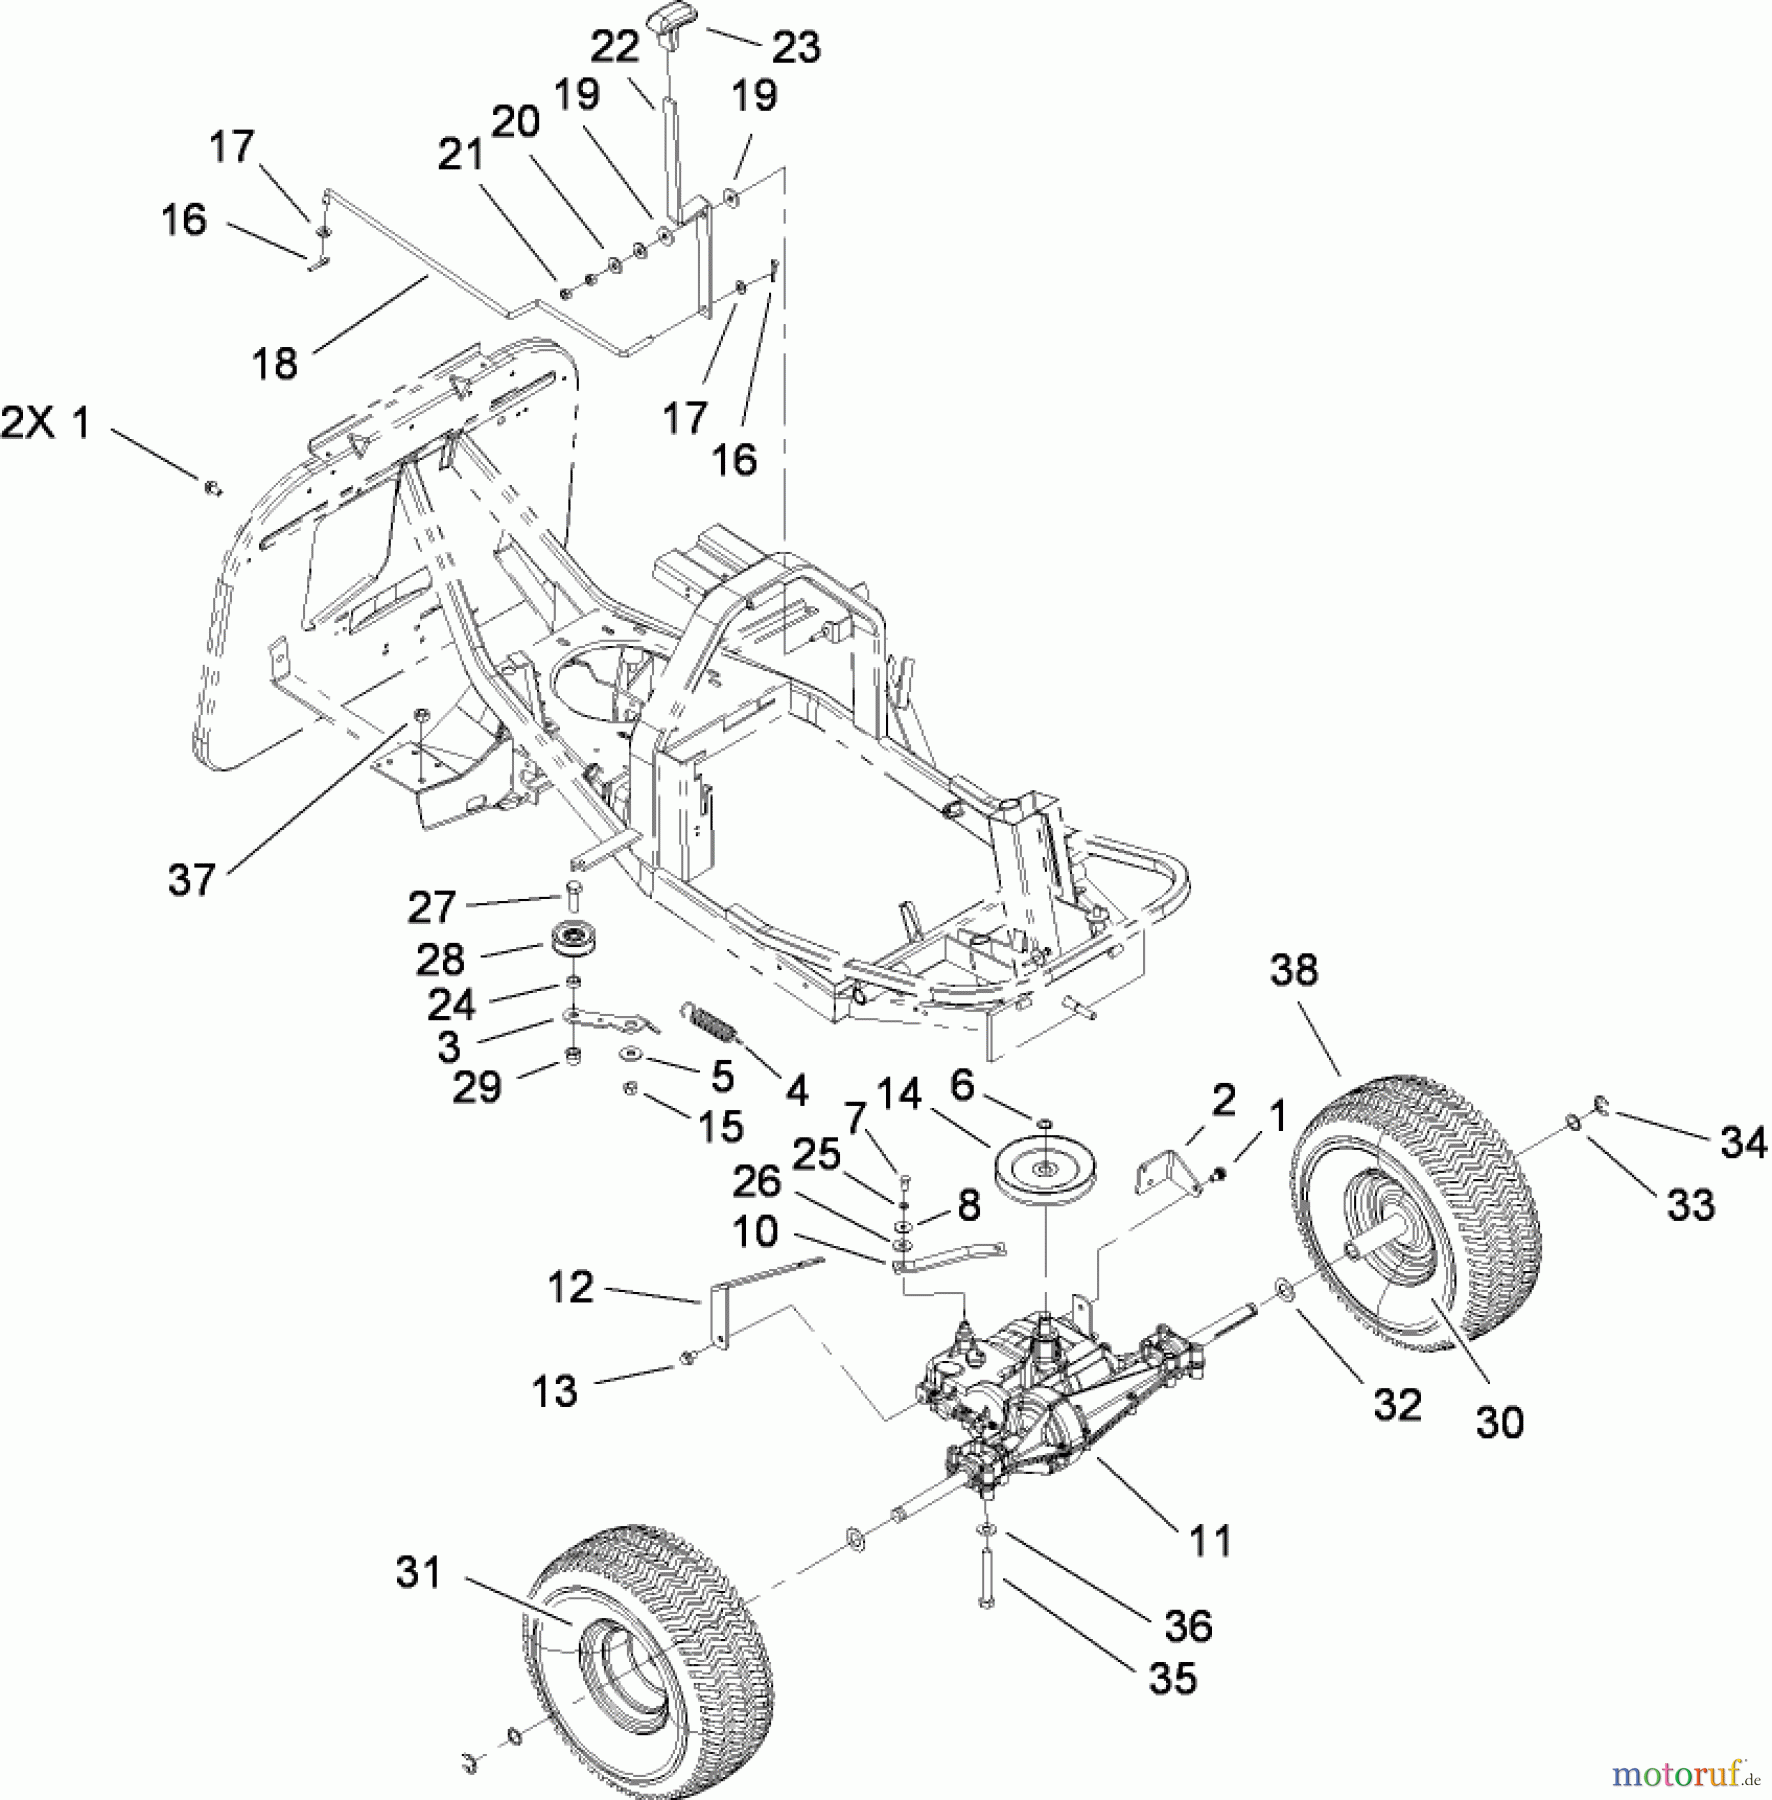  Toro Neu Mowers, Rear-Engine Rider 70185 (G132) - Toro G132 Rear-Engine Riding Mower, 2008 (270805706-280899564) GEAR TRANSMISSION AND LINKAGE ASSEMBLY